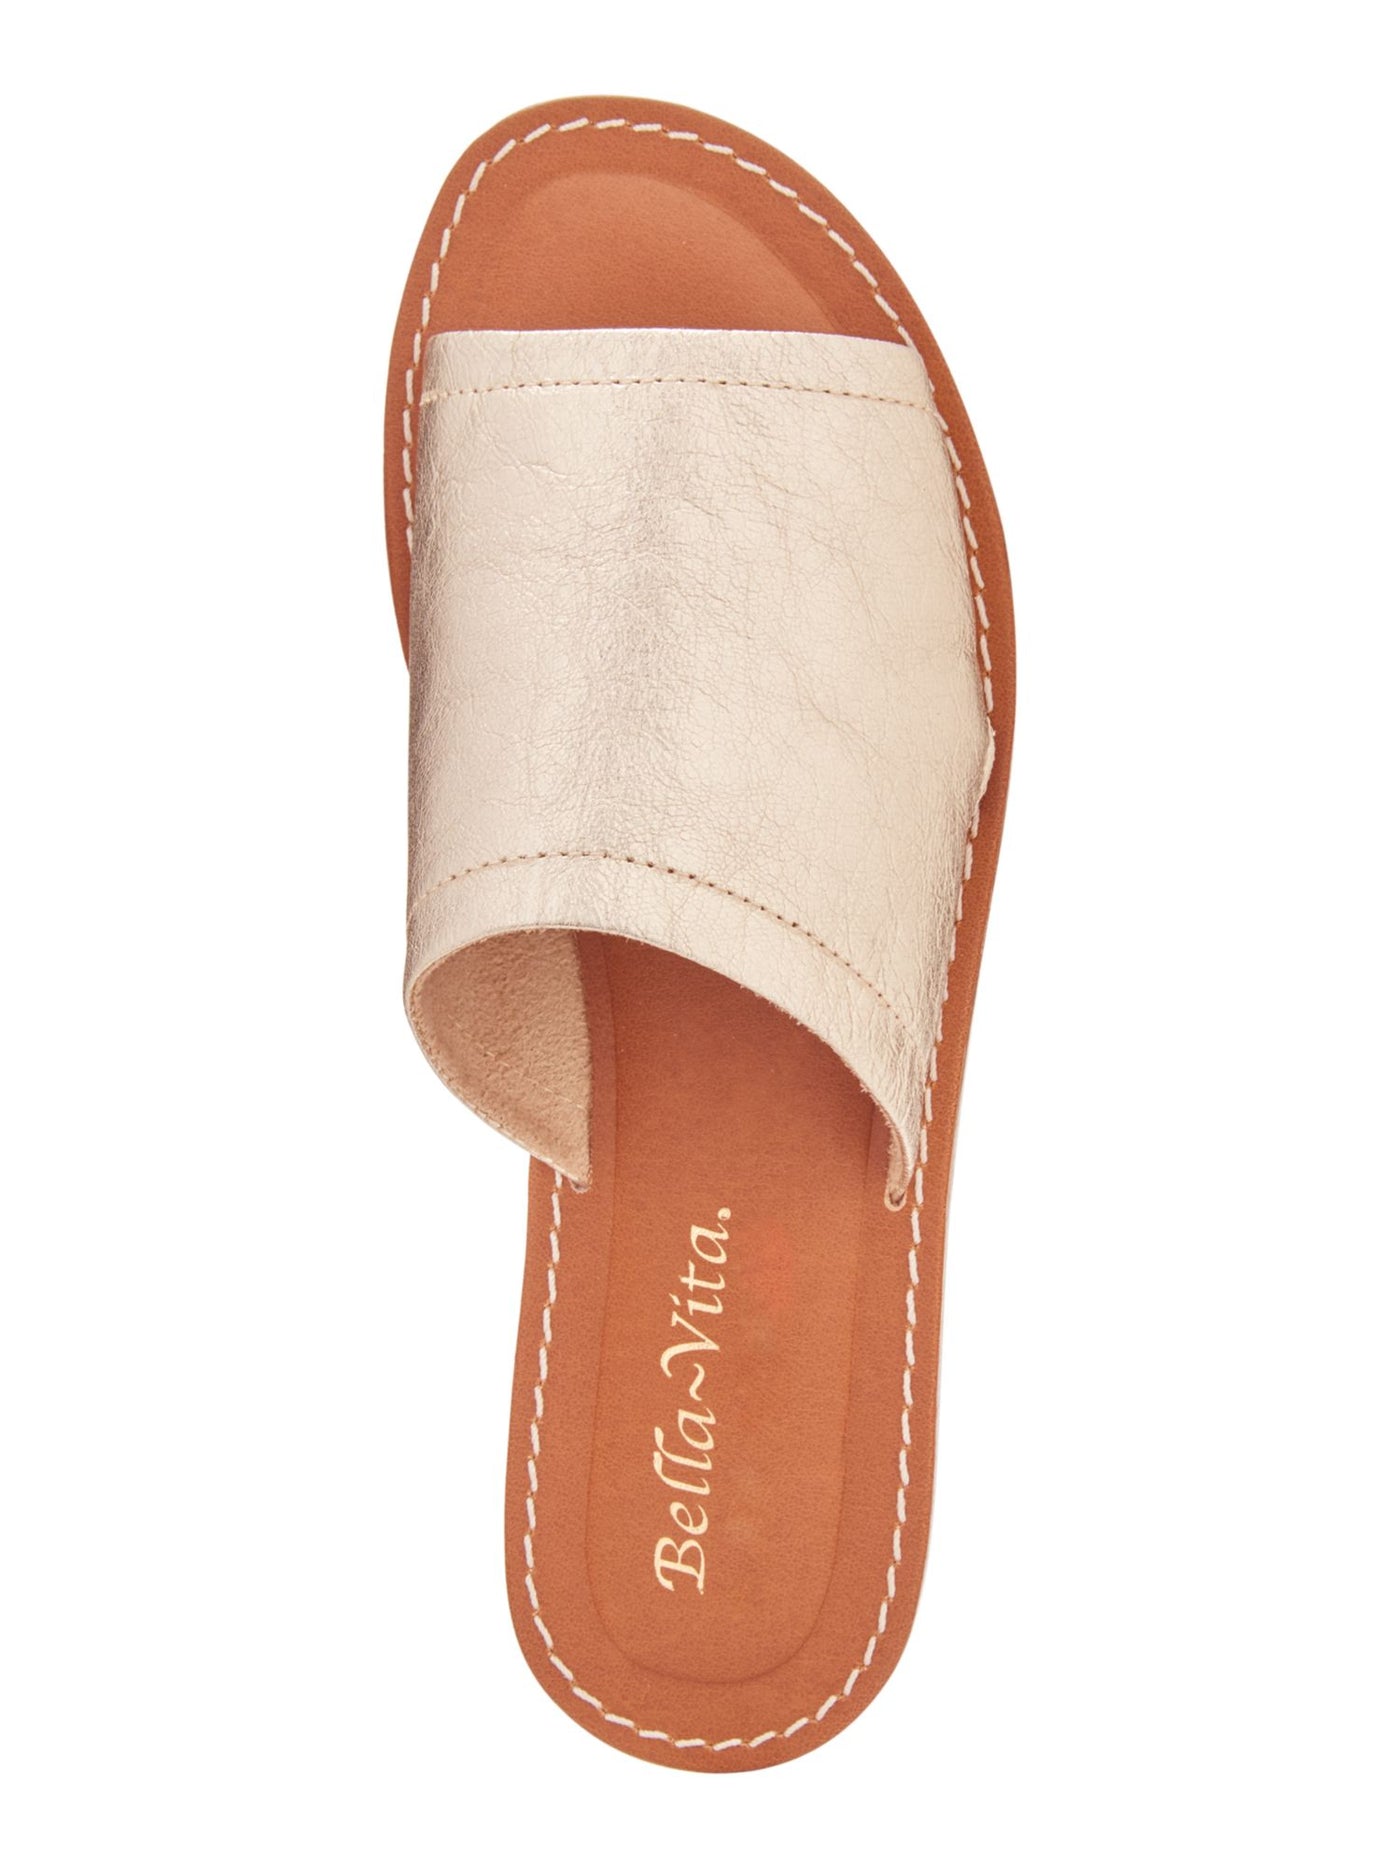 BELLA VITA Womens Gold 1/2" Platform Padded Ros Round Toe Slip On Leather Slide Sandals Shoes 9 WW